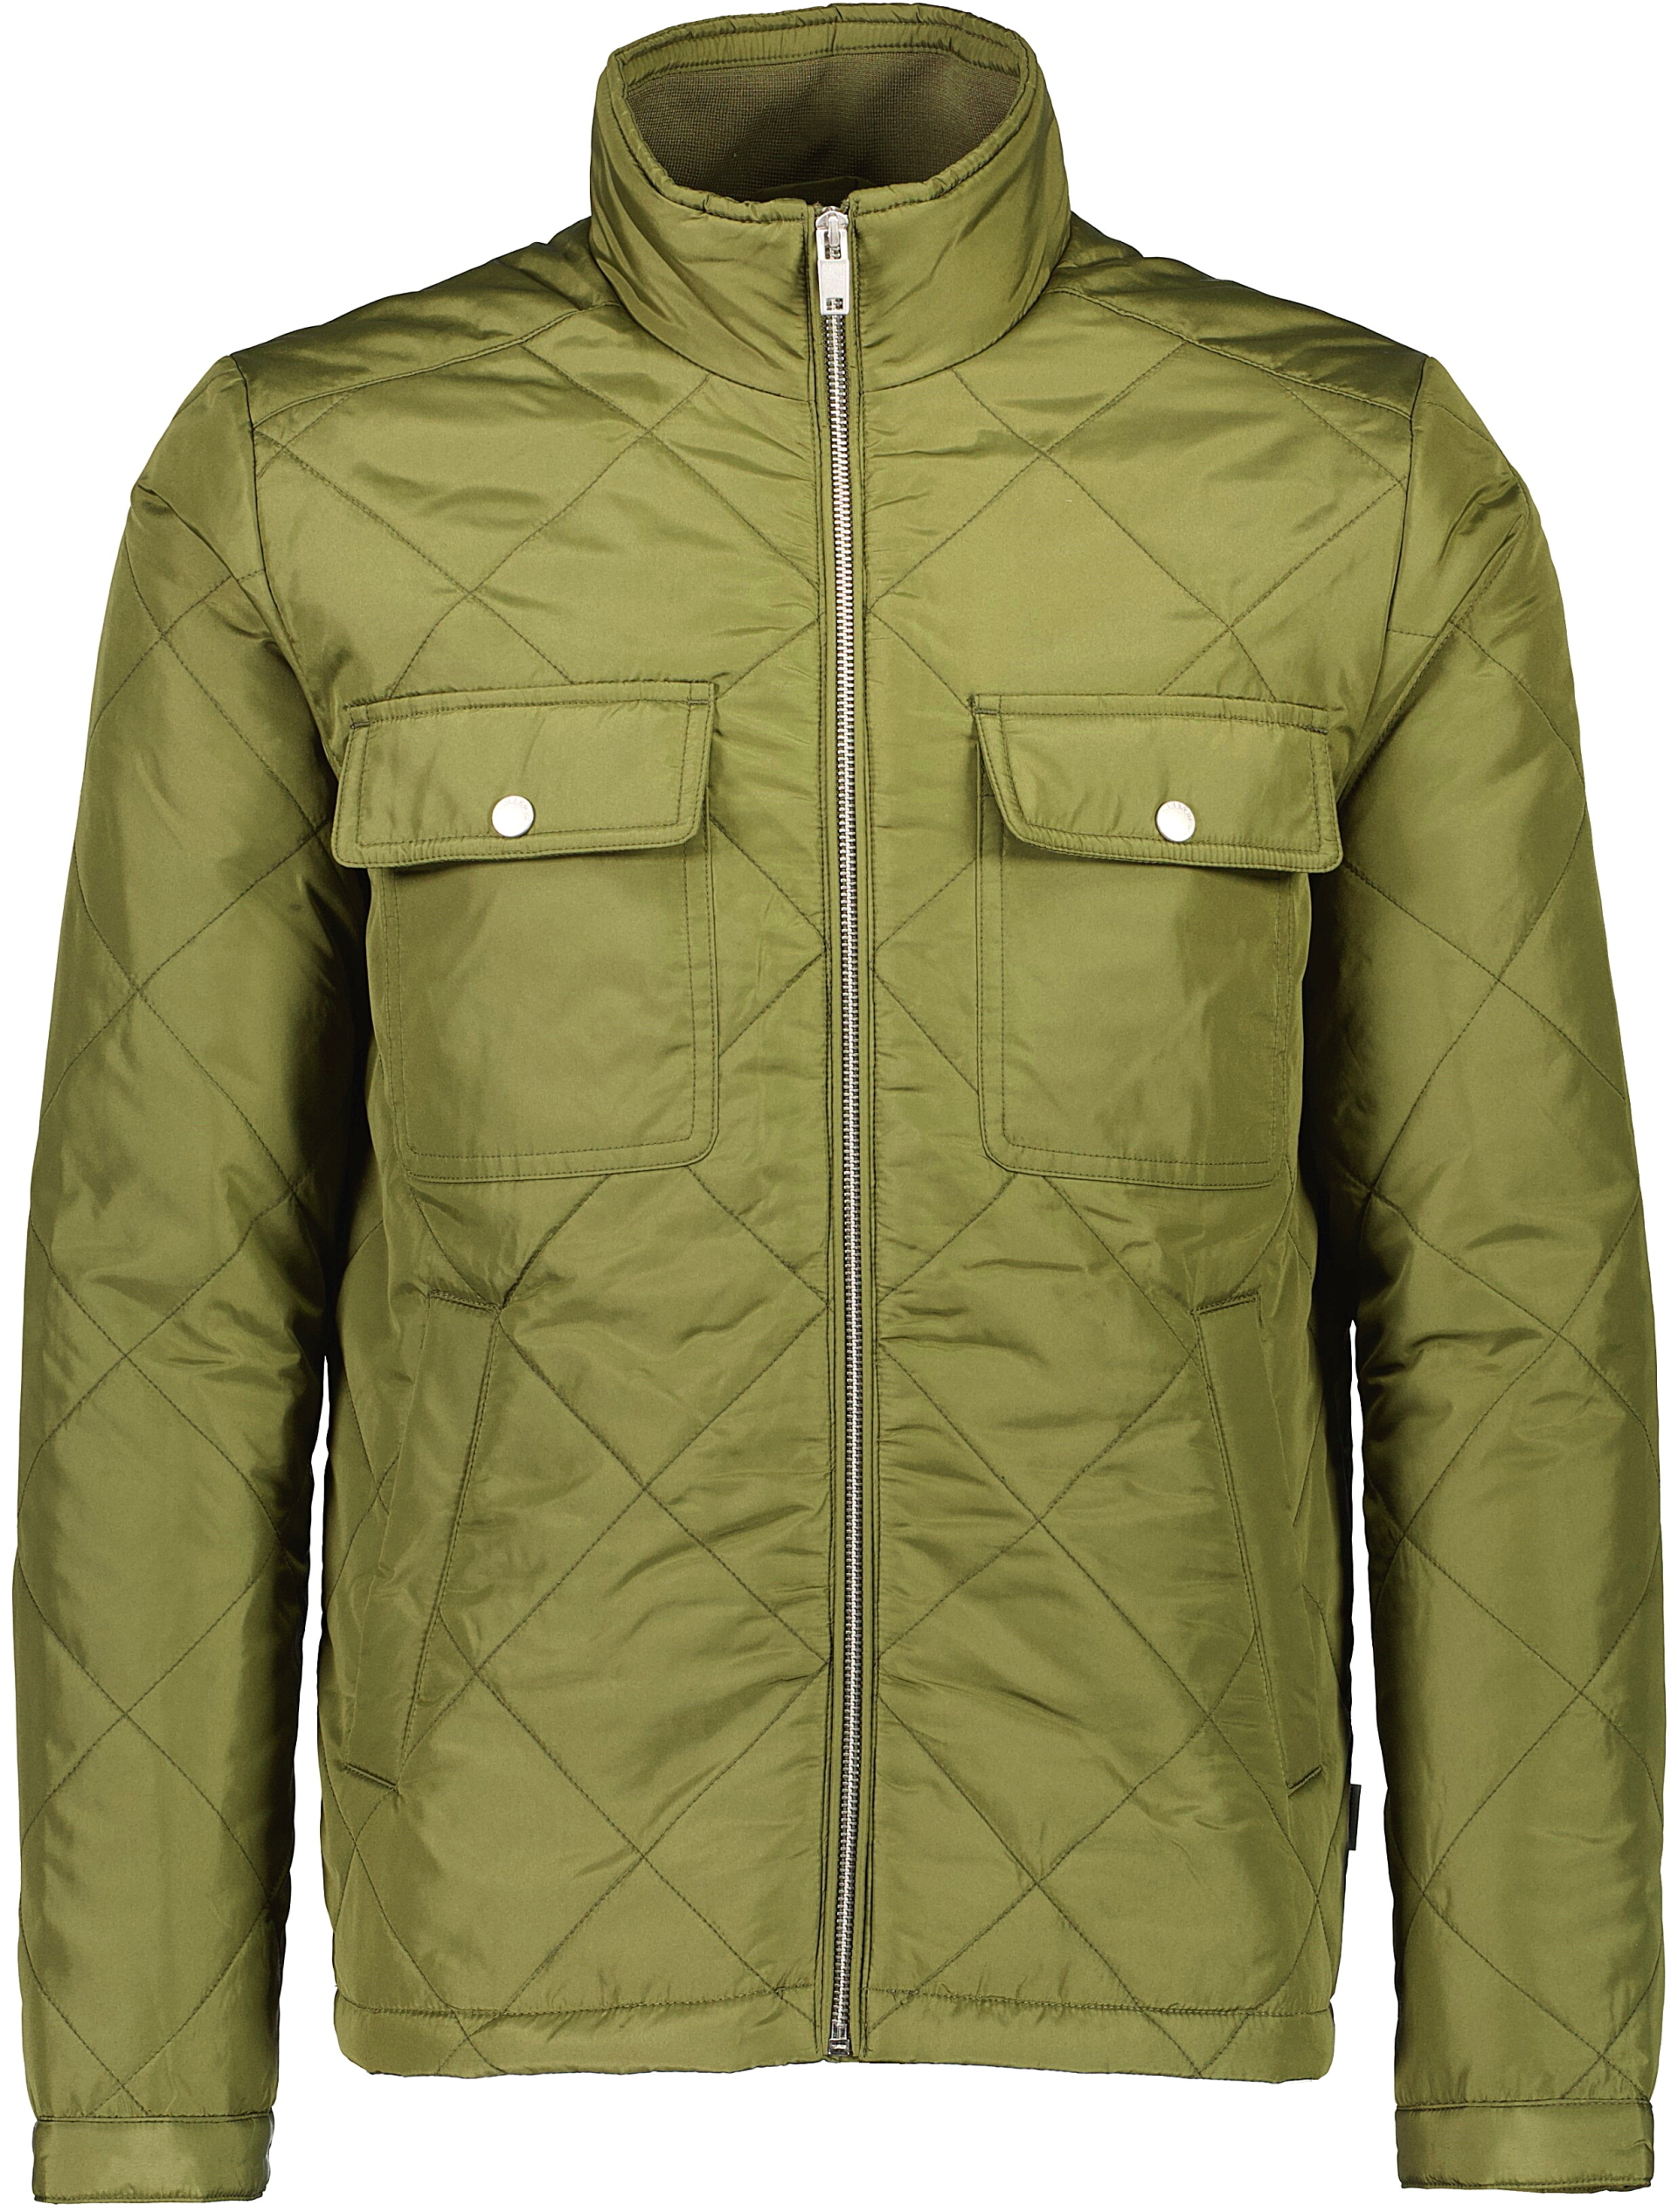 Lindbergh Casual jakke grøn / army